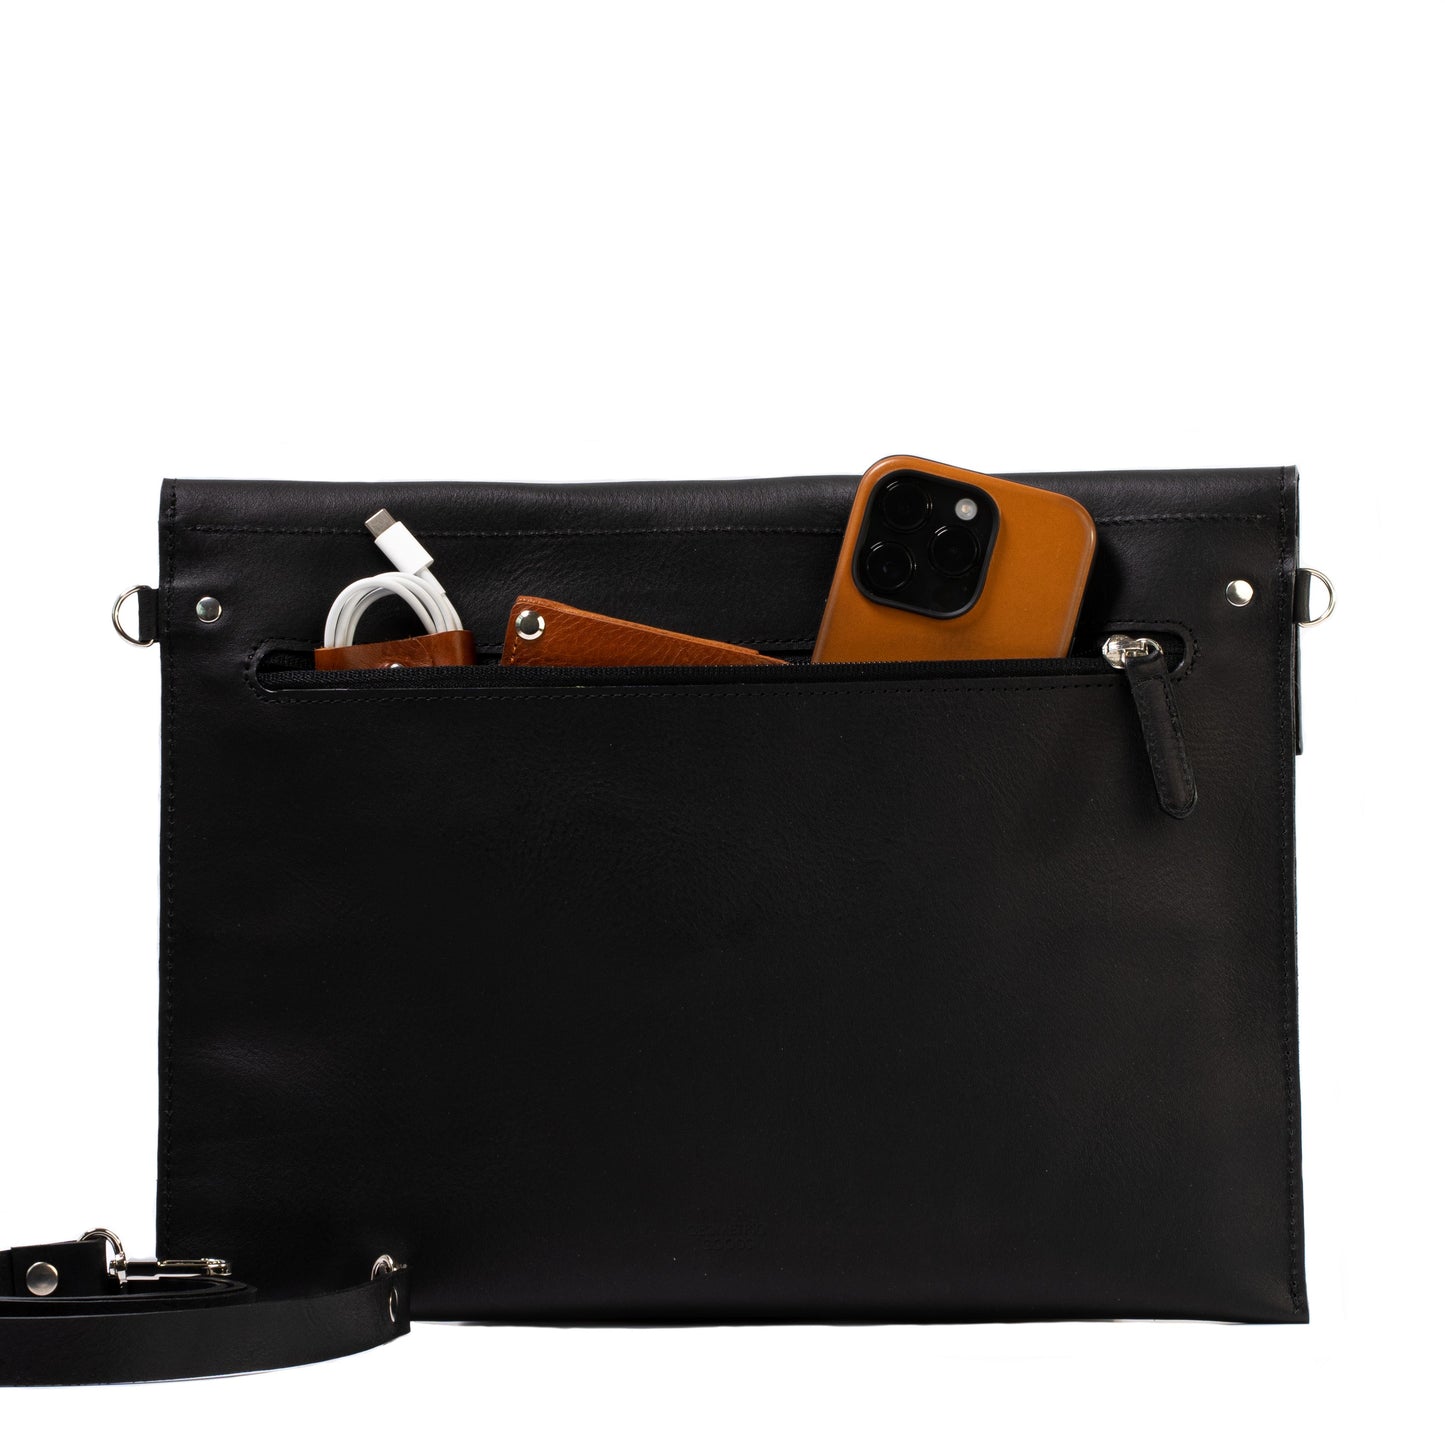 Leather Bag for iPad - The Minimalist 2.0-11